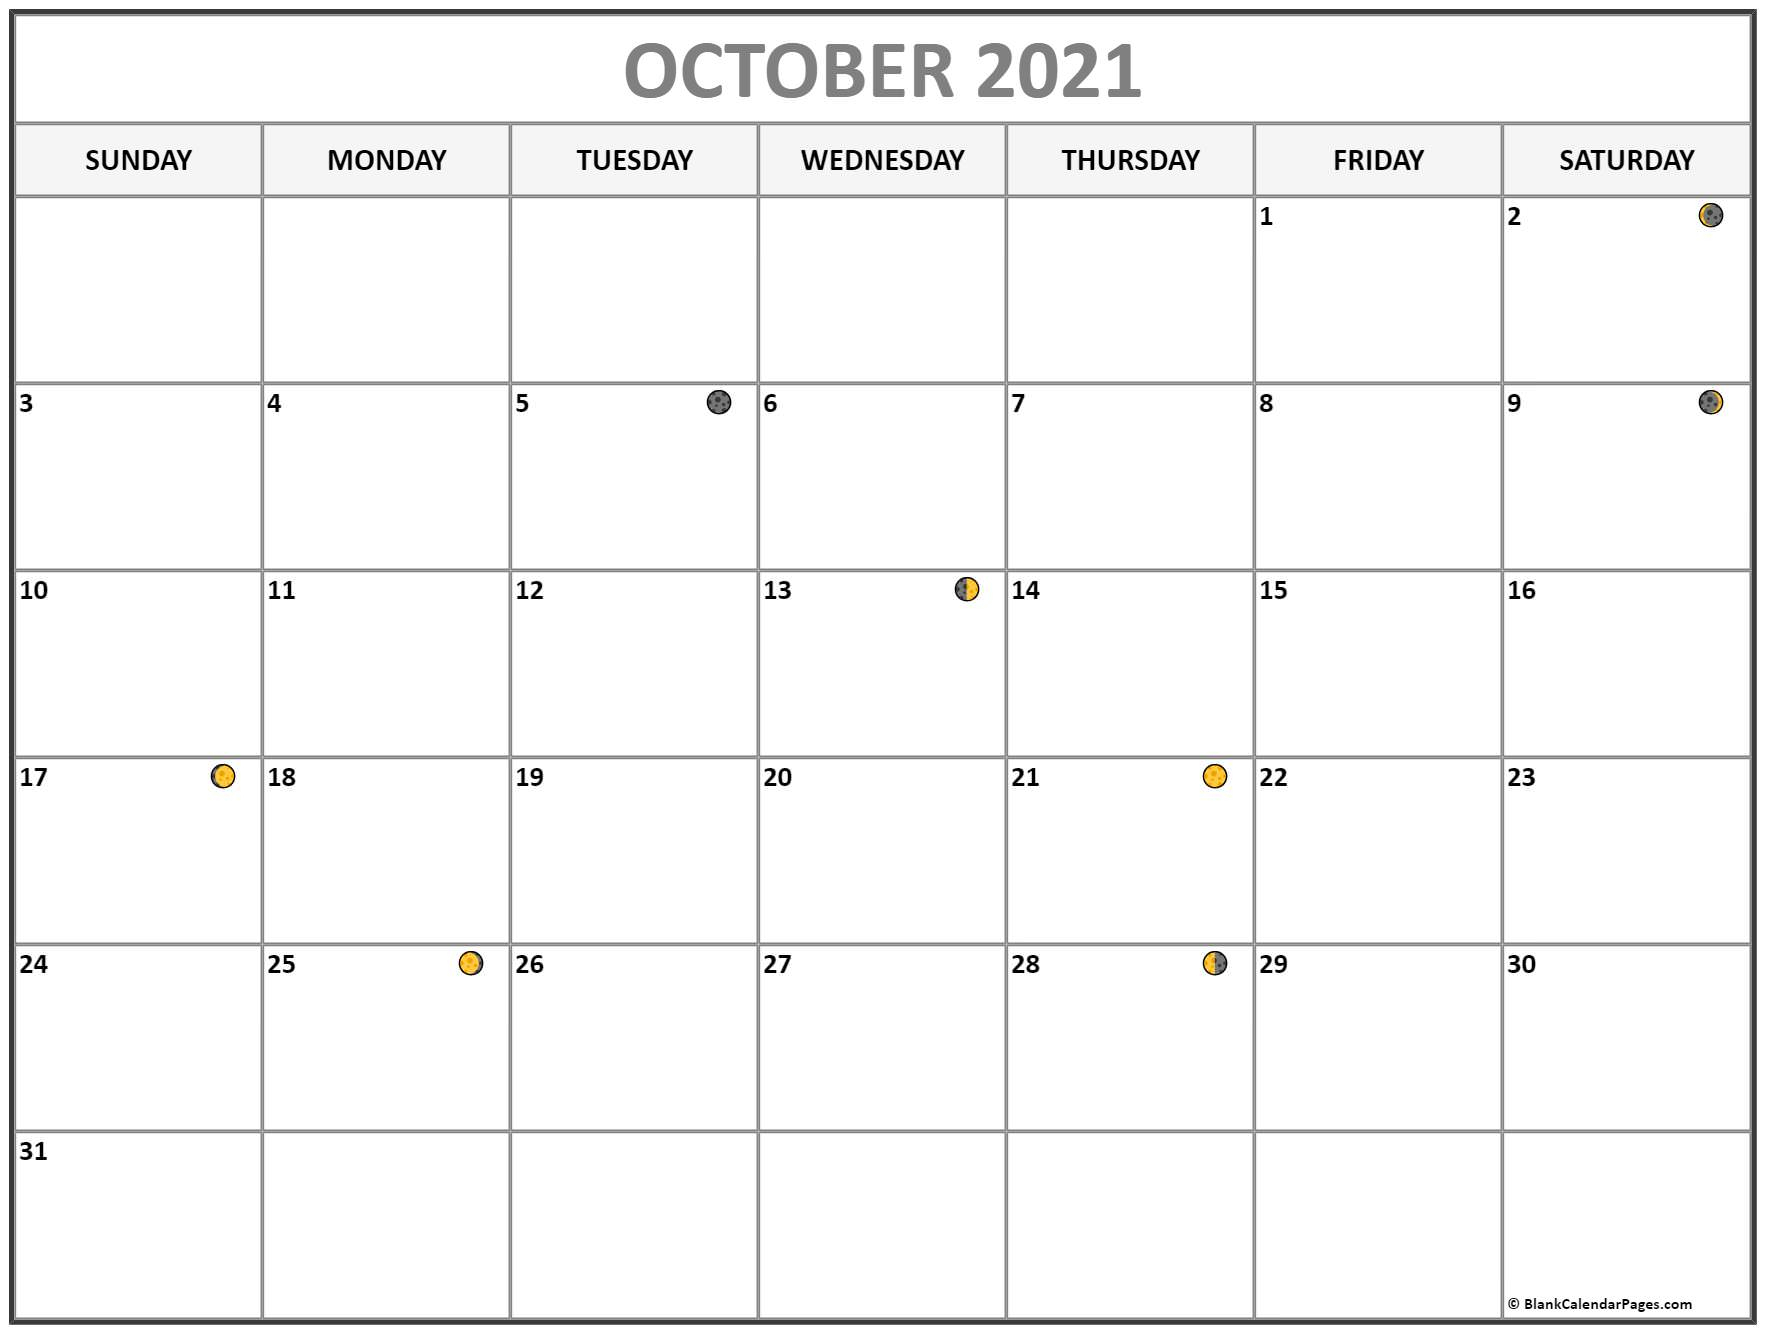 October 2021 Lunar Calendar | Moon Phase Calendar